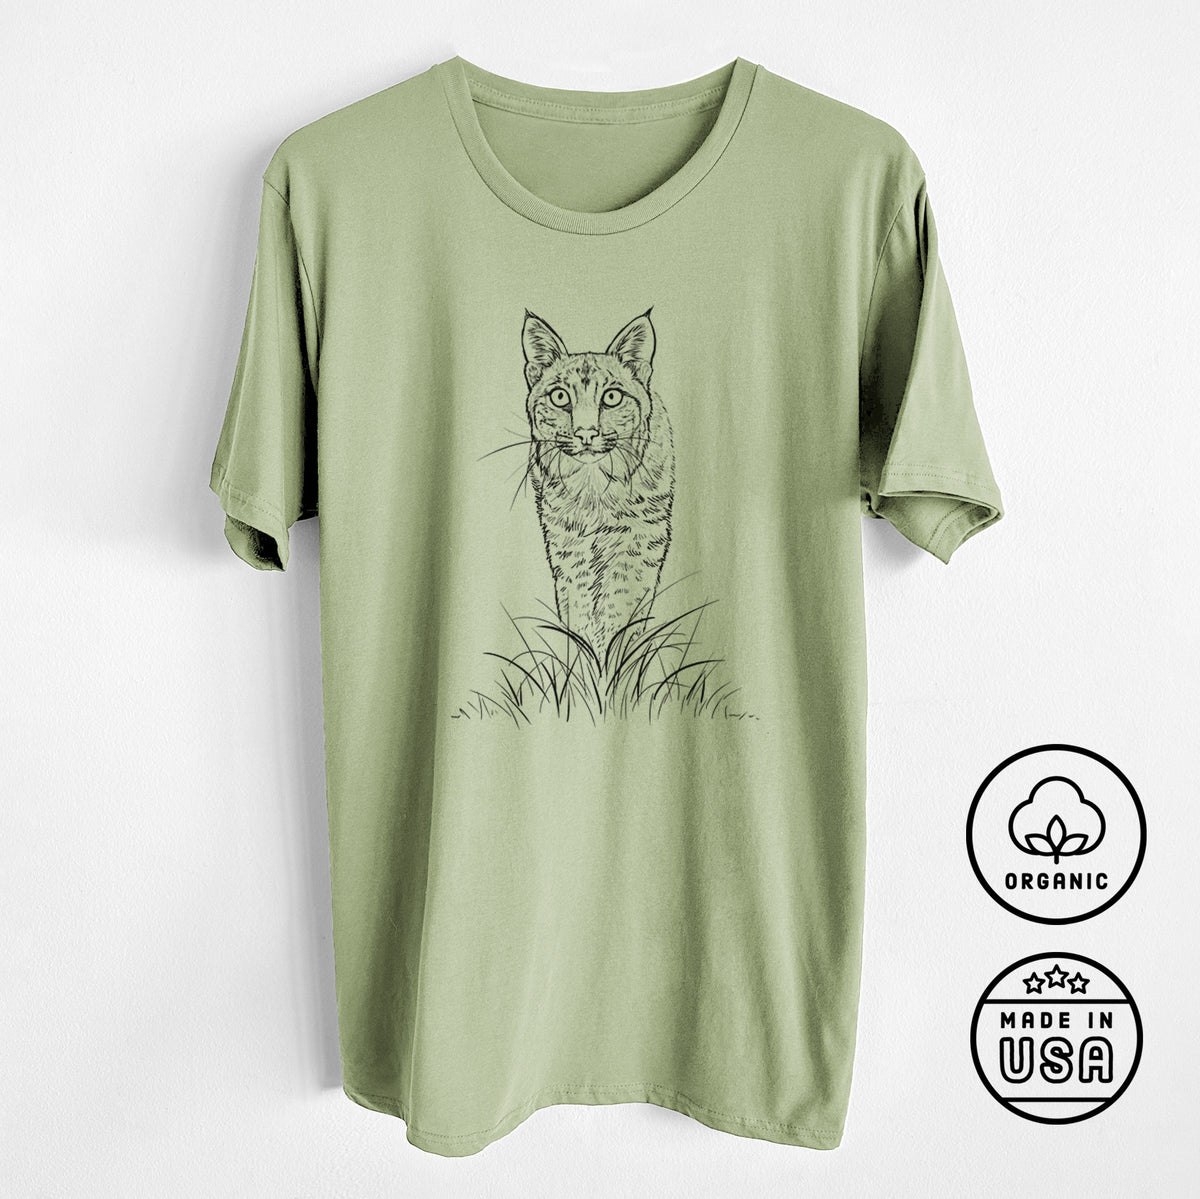 Bobcat - Lynx rufus - Unisex Crewneck - Made in USA - 100% Organic Cotton